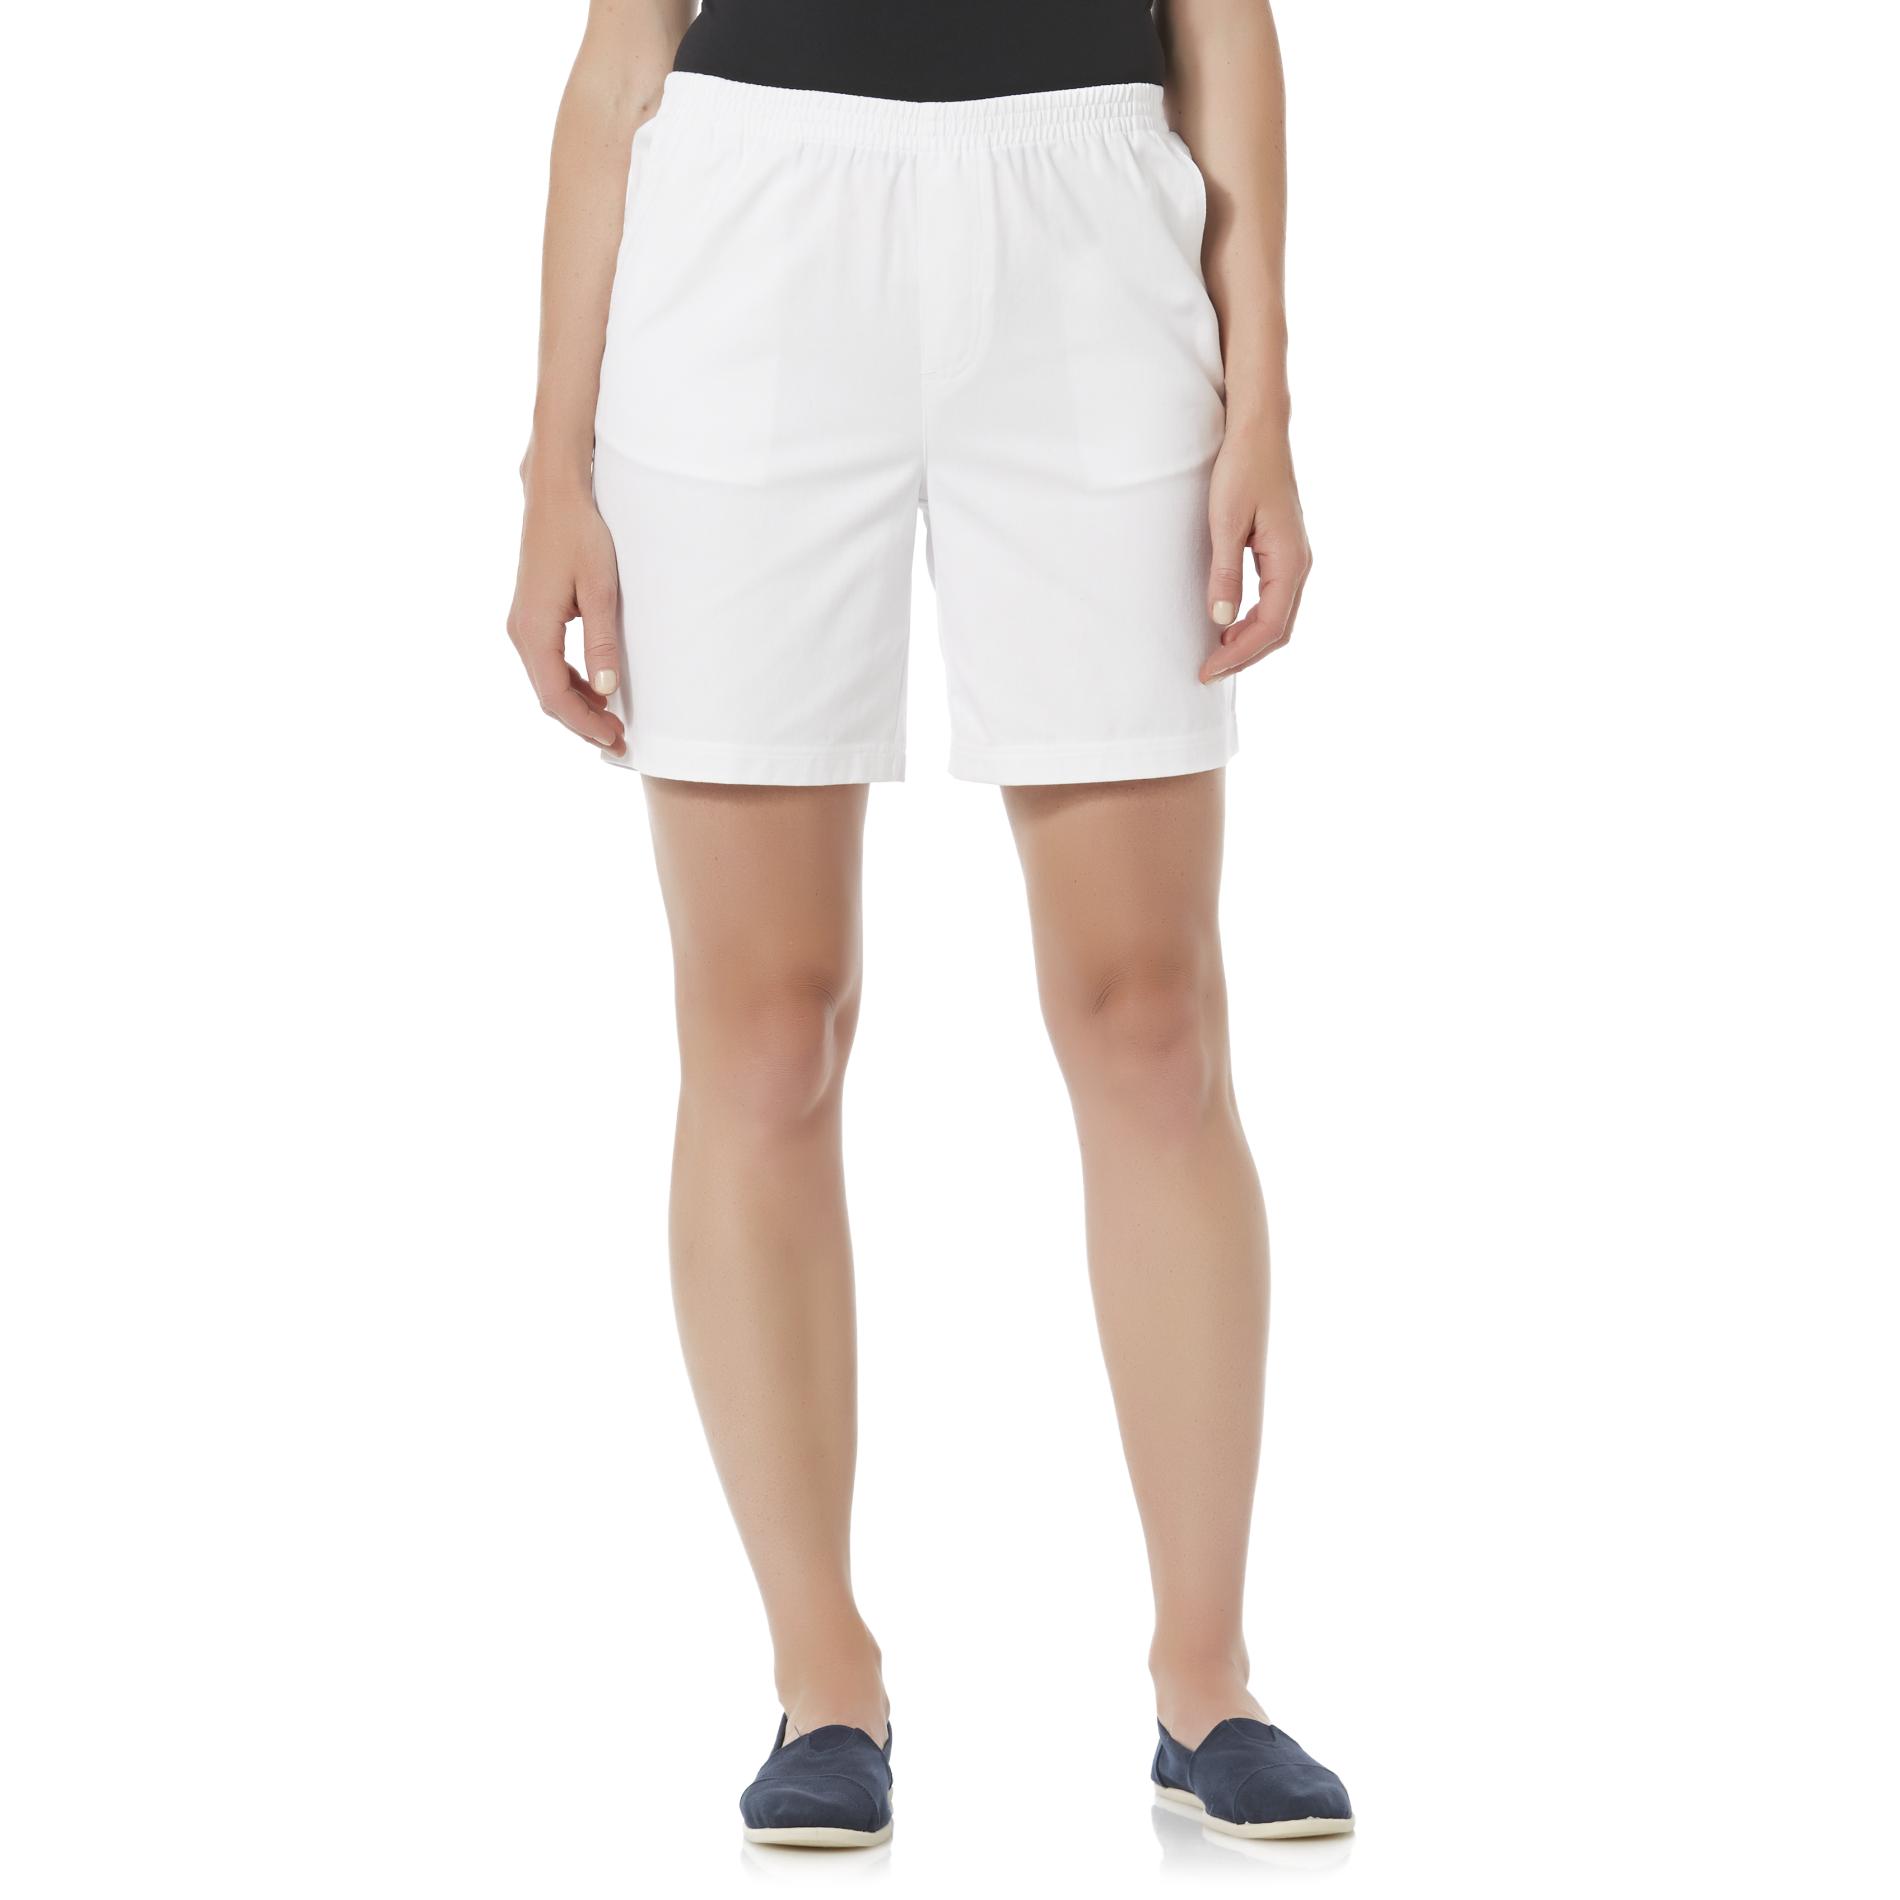 Womens Elastic Waist Shorts | Kmart.com